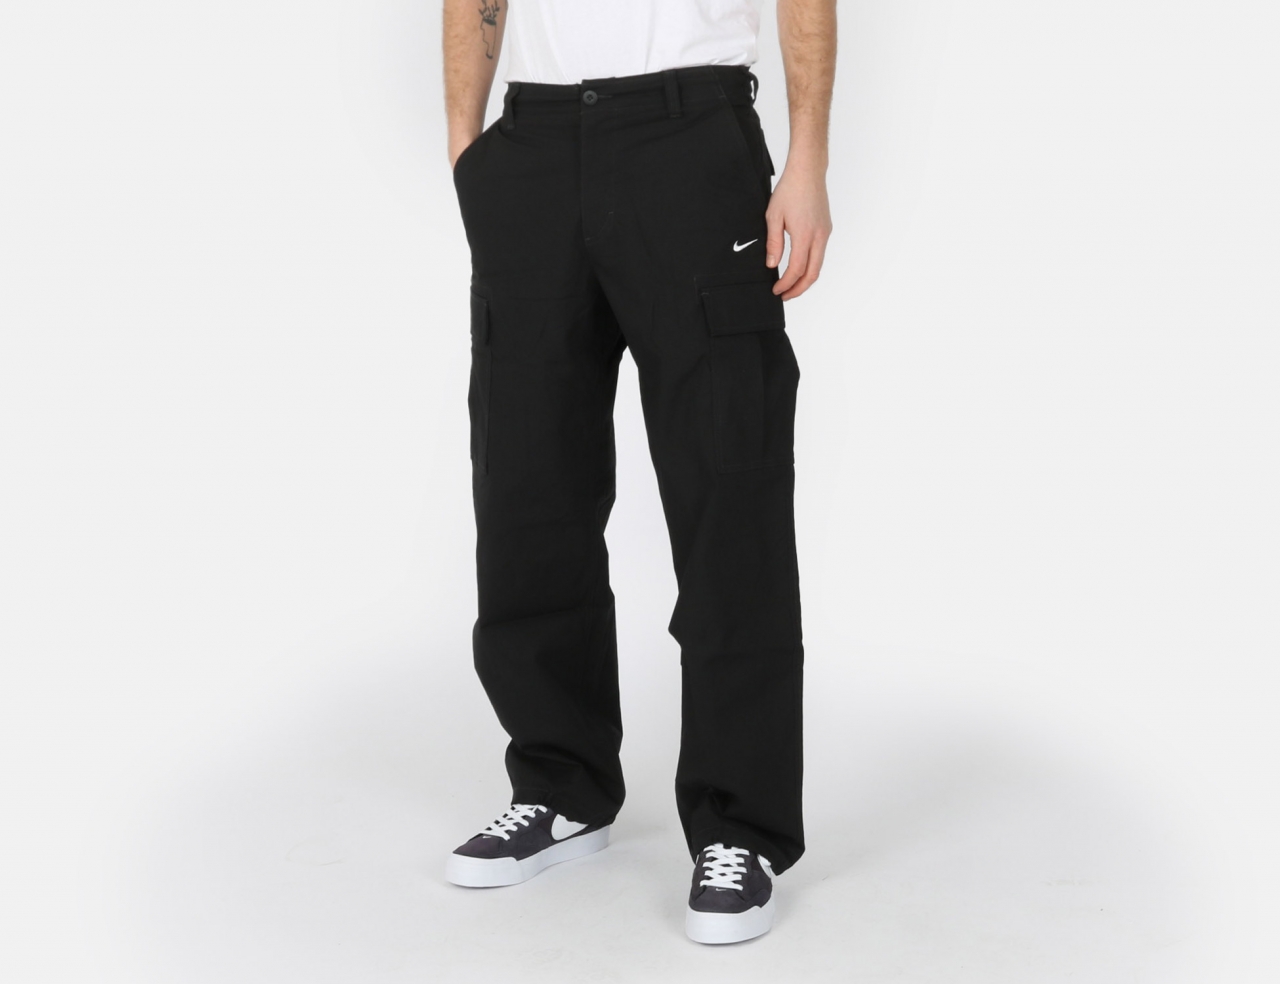 Nike SB Kearny Cargo Pant - Black / White